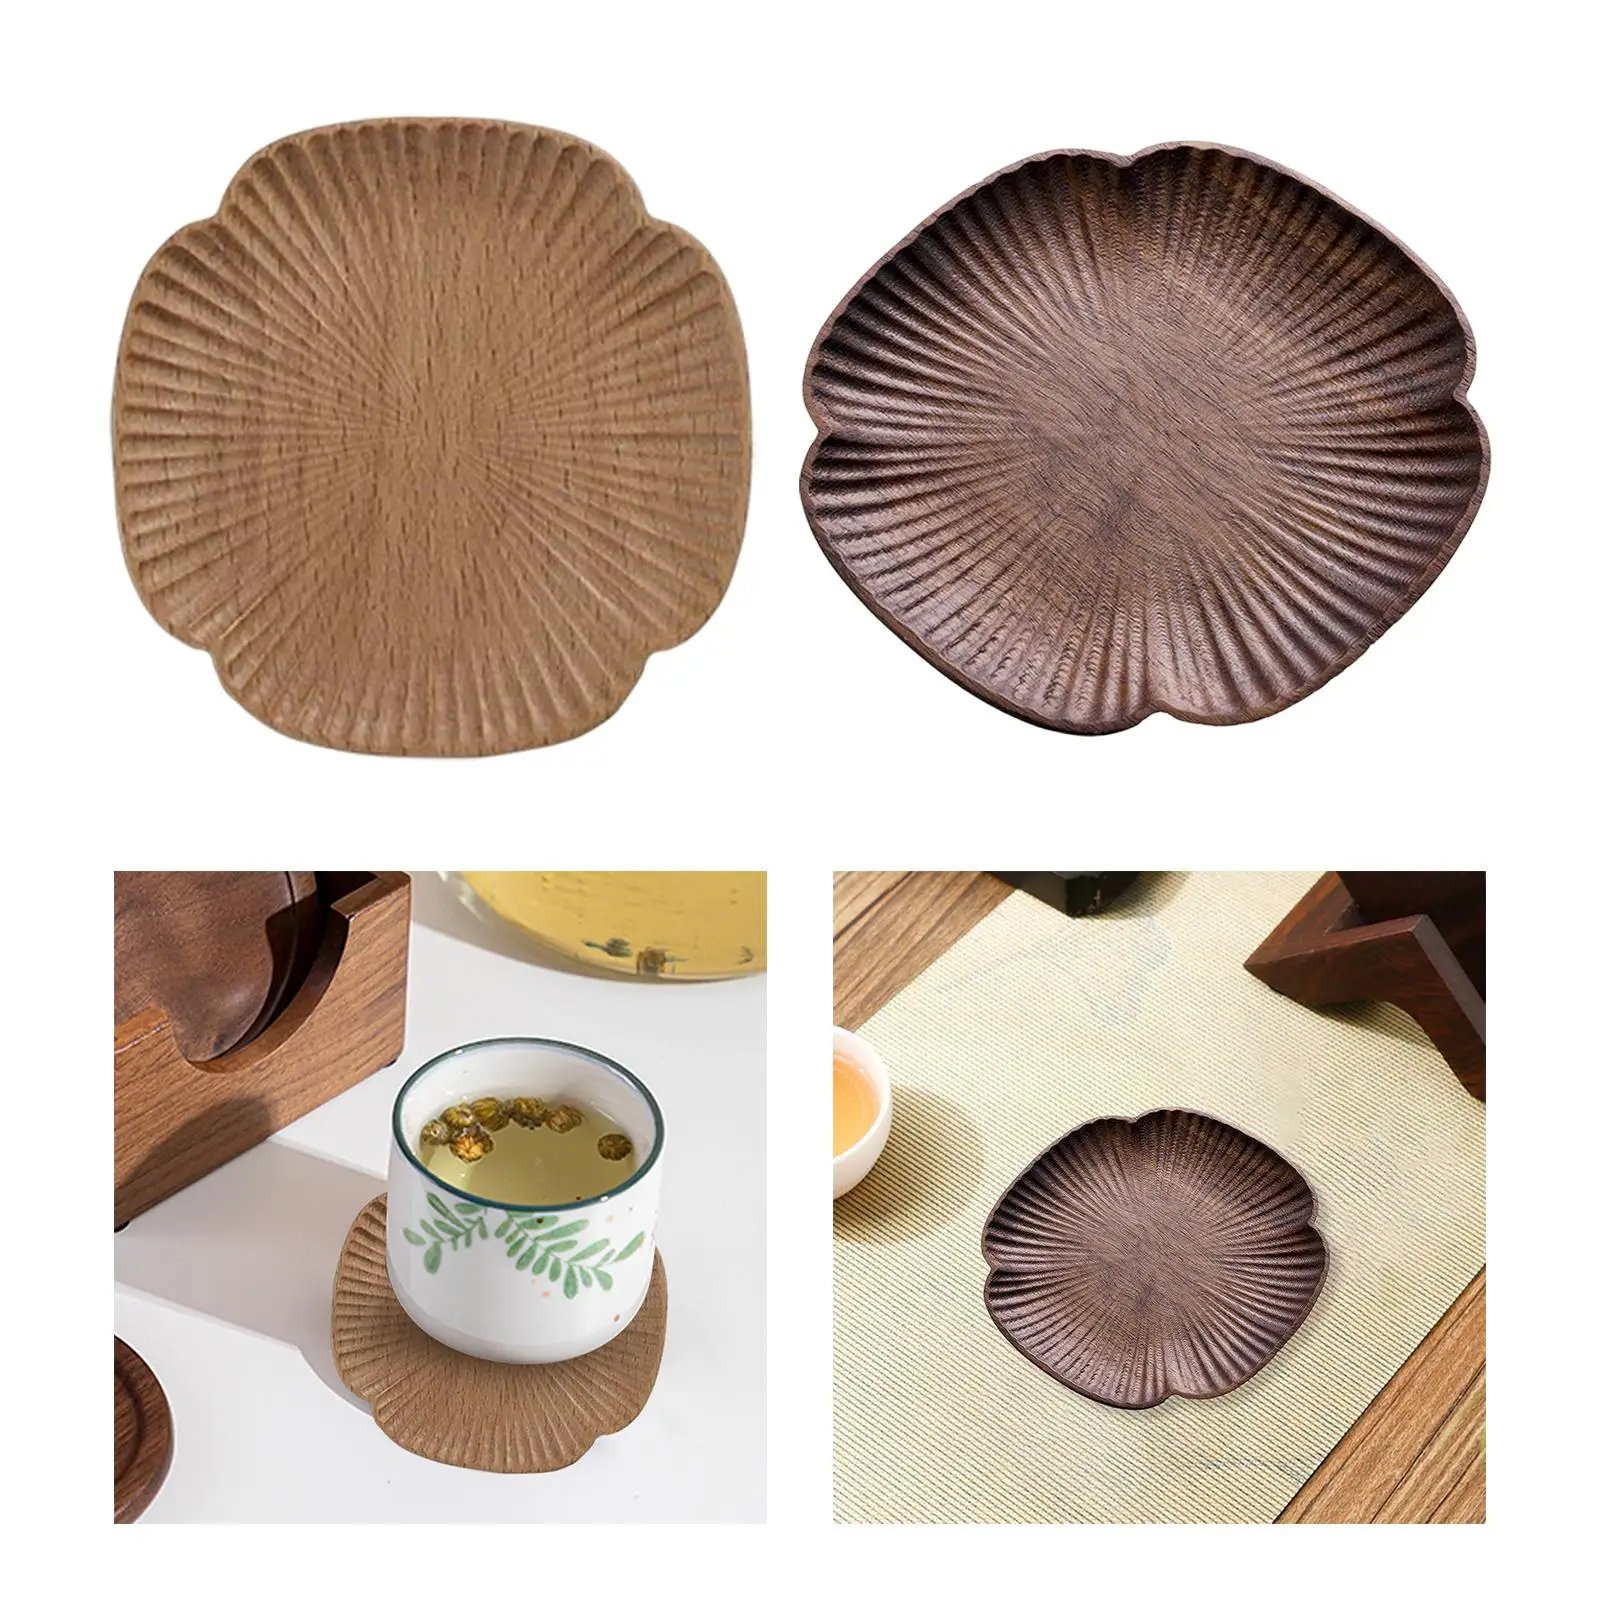 Tea Coffee Cup Pad Wood Coaster Cup Mat Flower Practical Heat Resistant Multipurpose Durable for Dinnerware Countertop Household